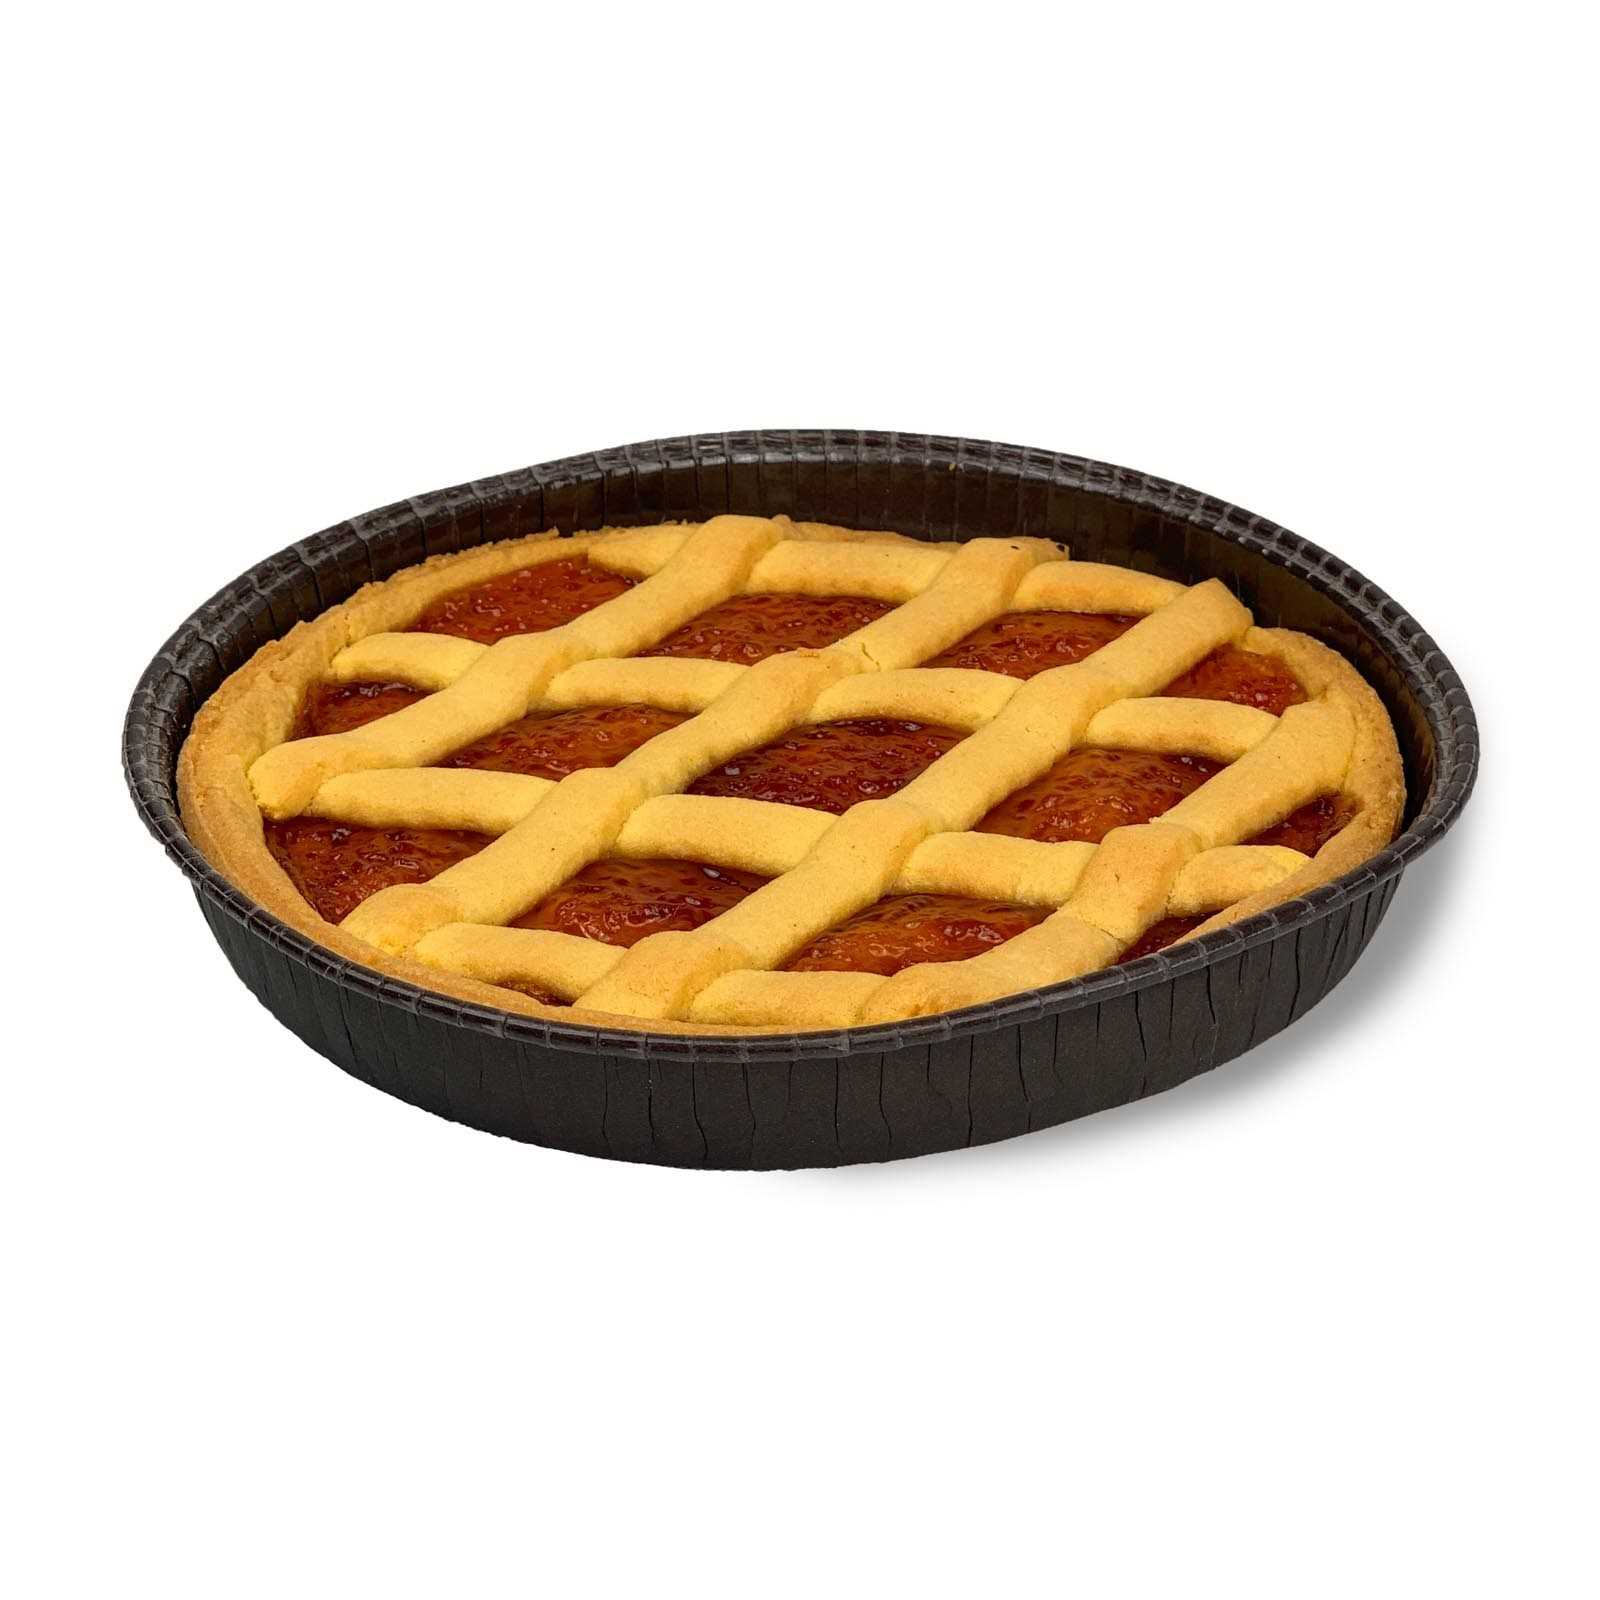 “Crostata” Apricot Jam Pie.